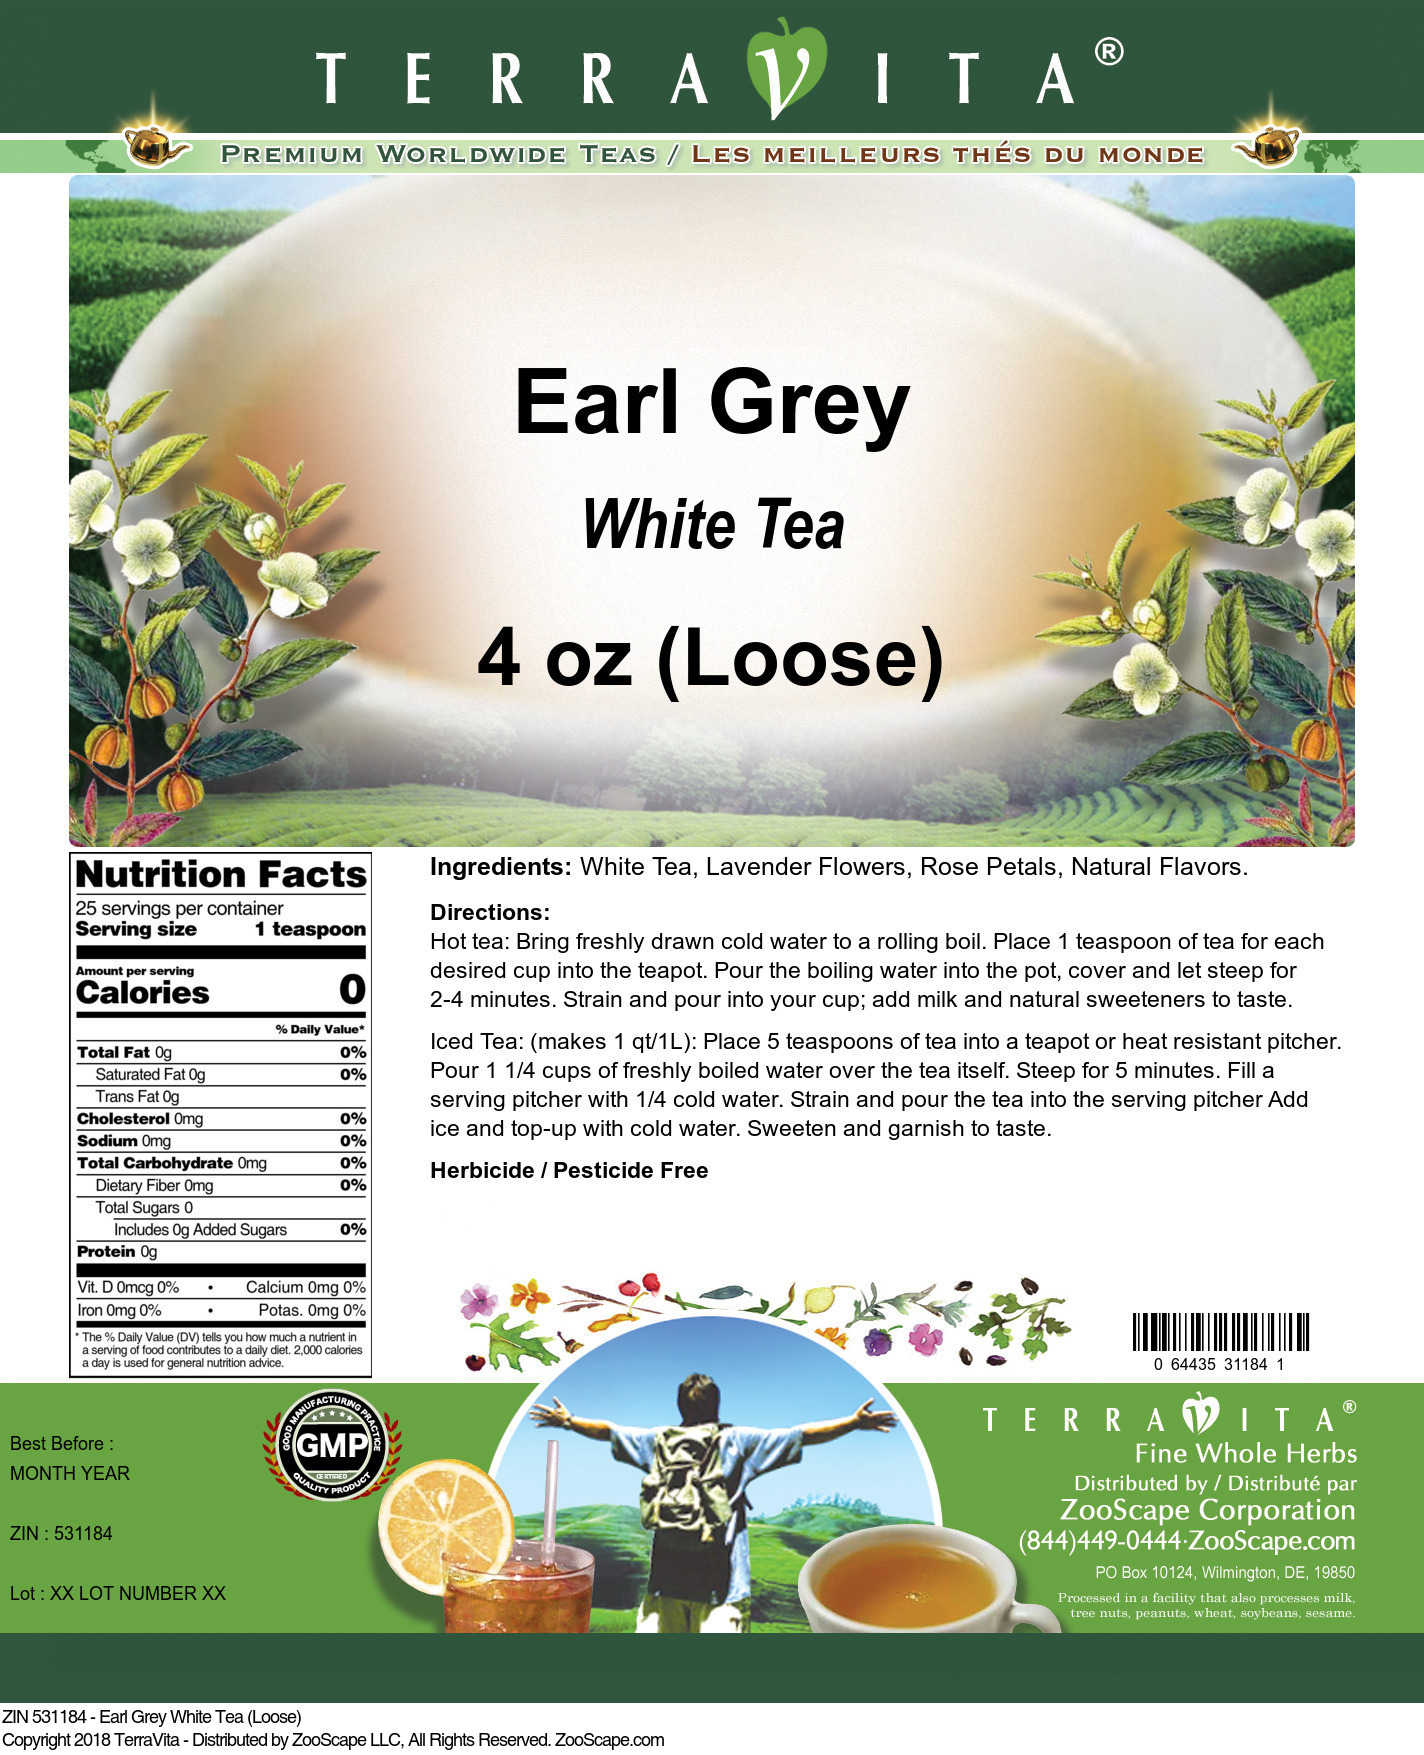 Earl Grey White Tea (Loose) - Label